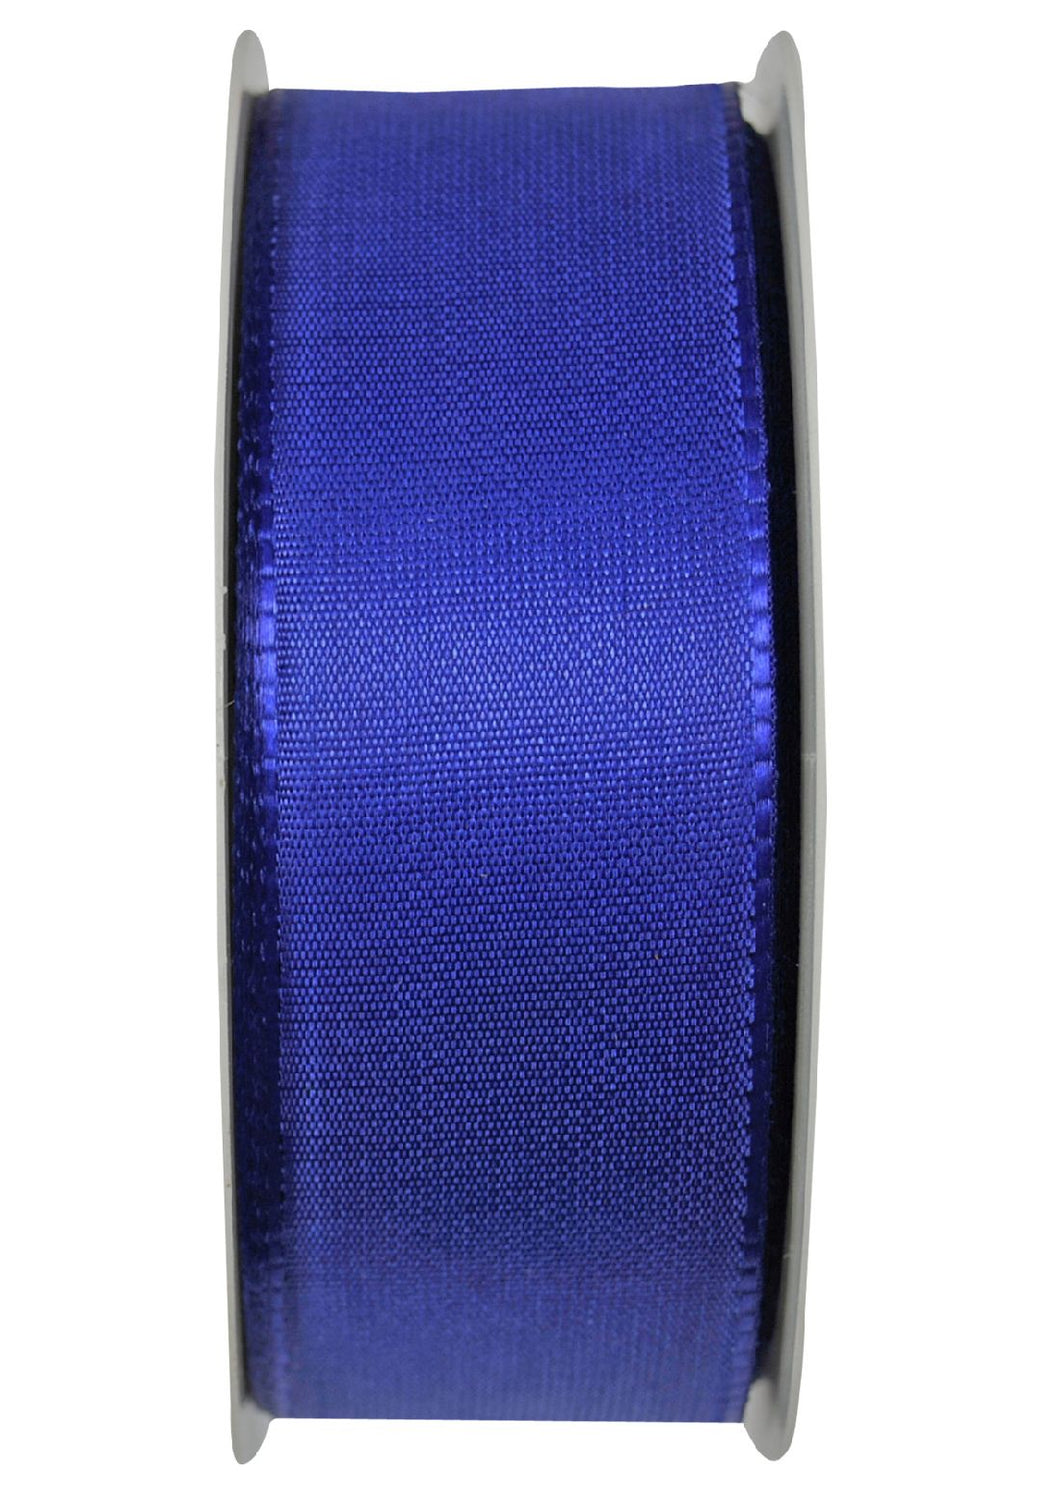 Basicband ohne Drahtkante Blau 40mm 50 Meter - 0,37 € pro Meter